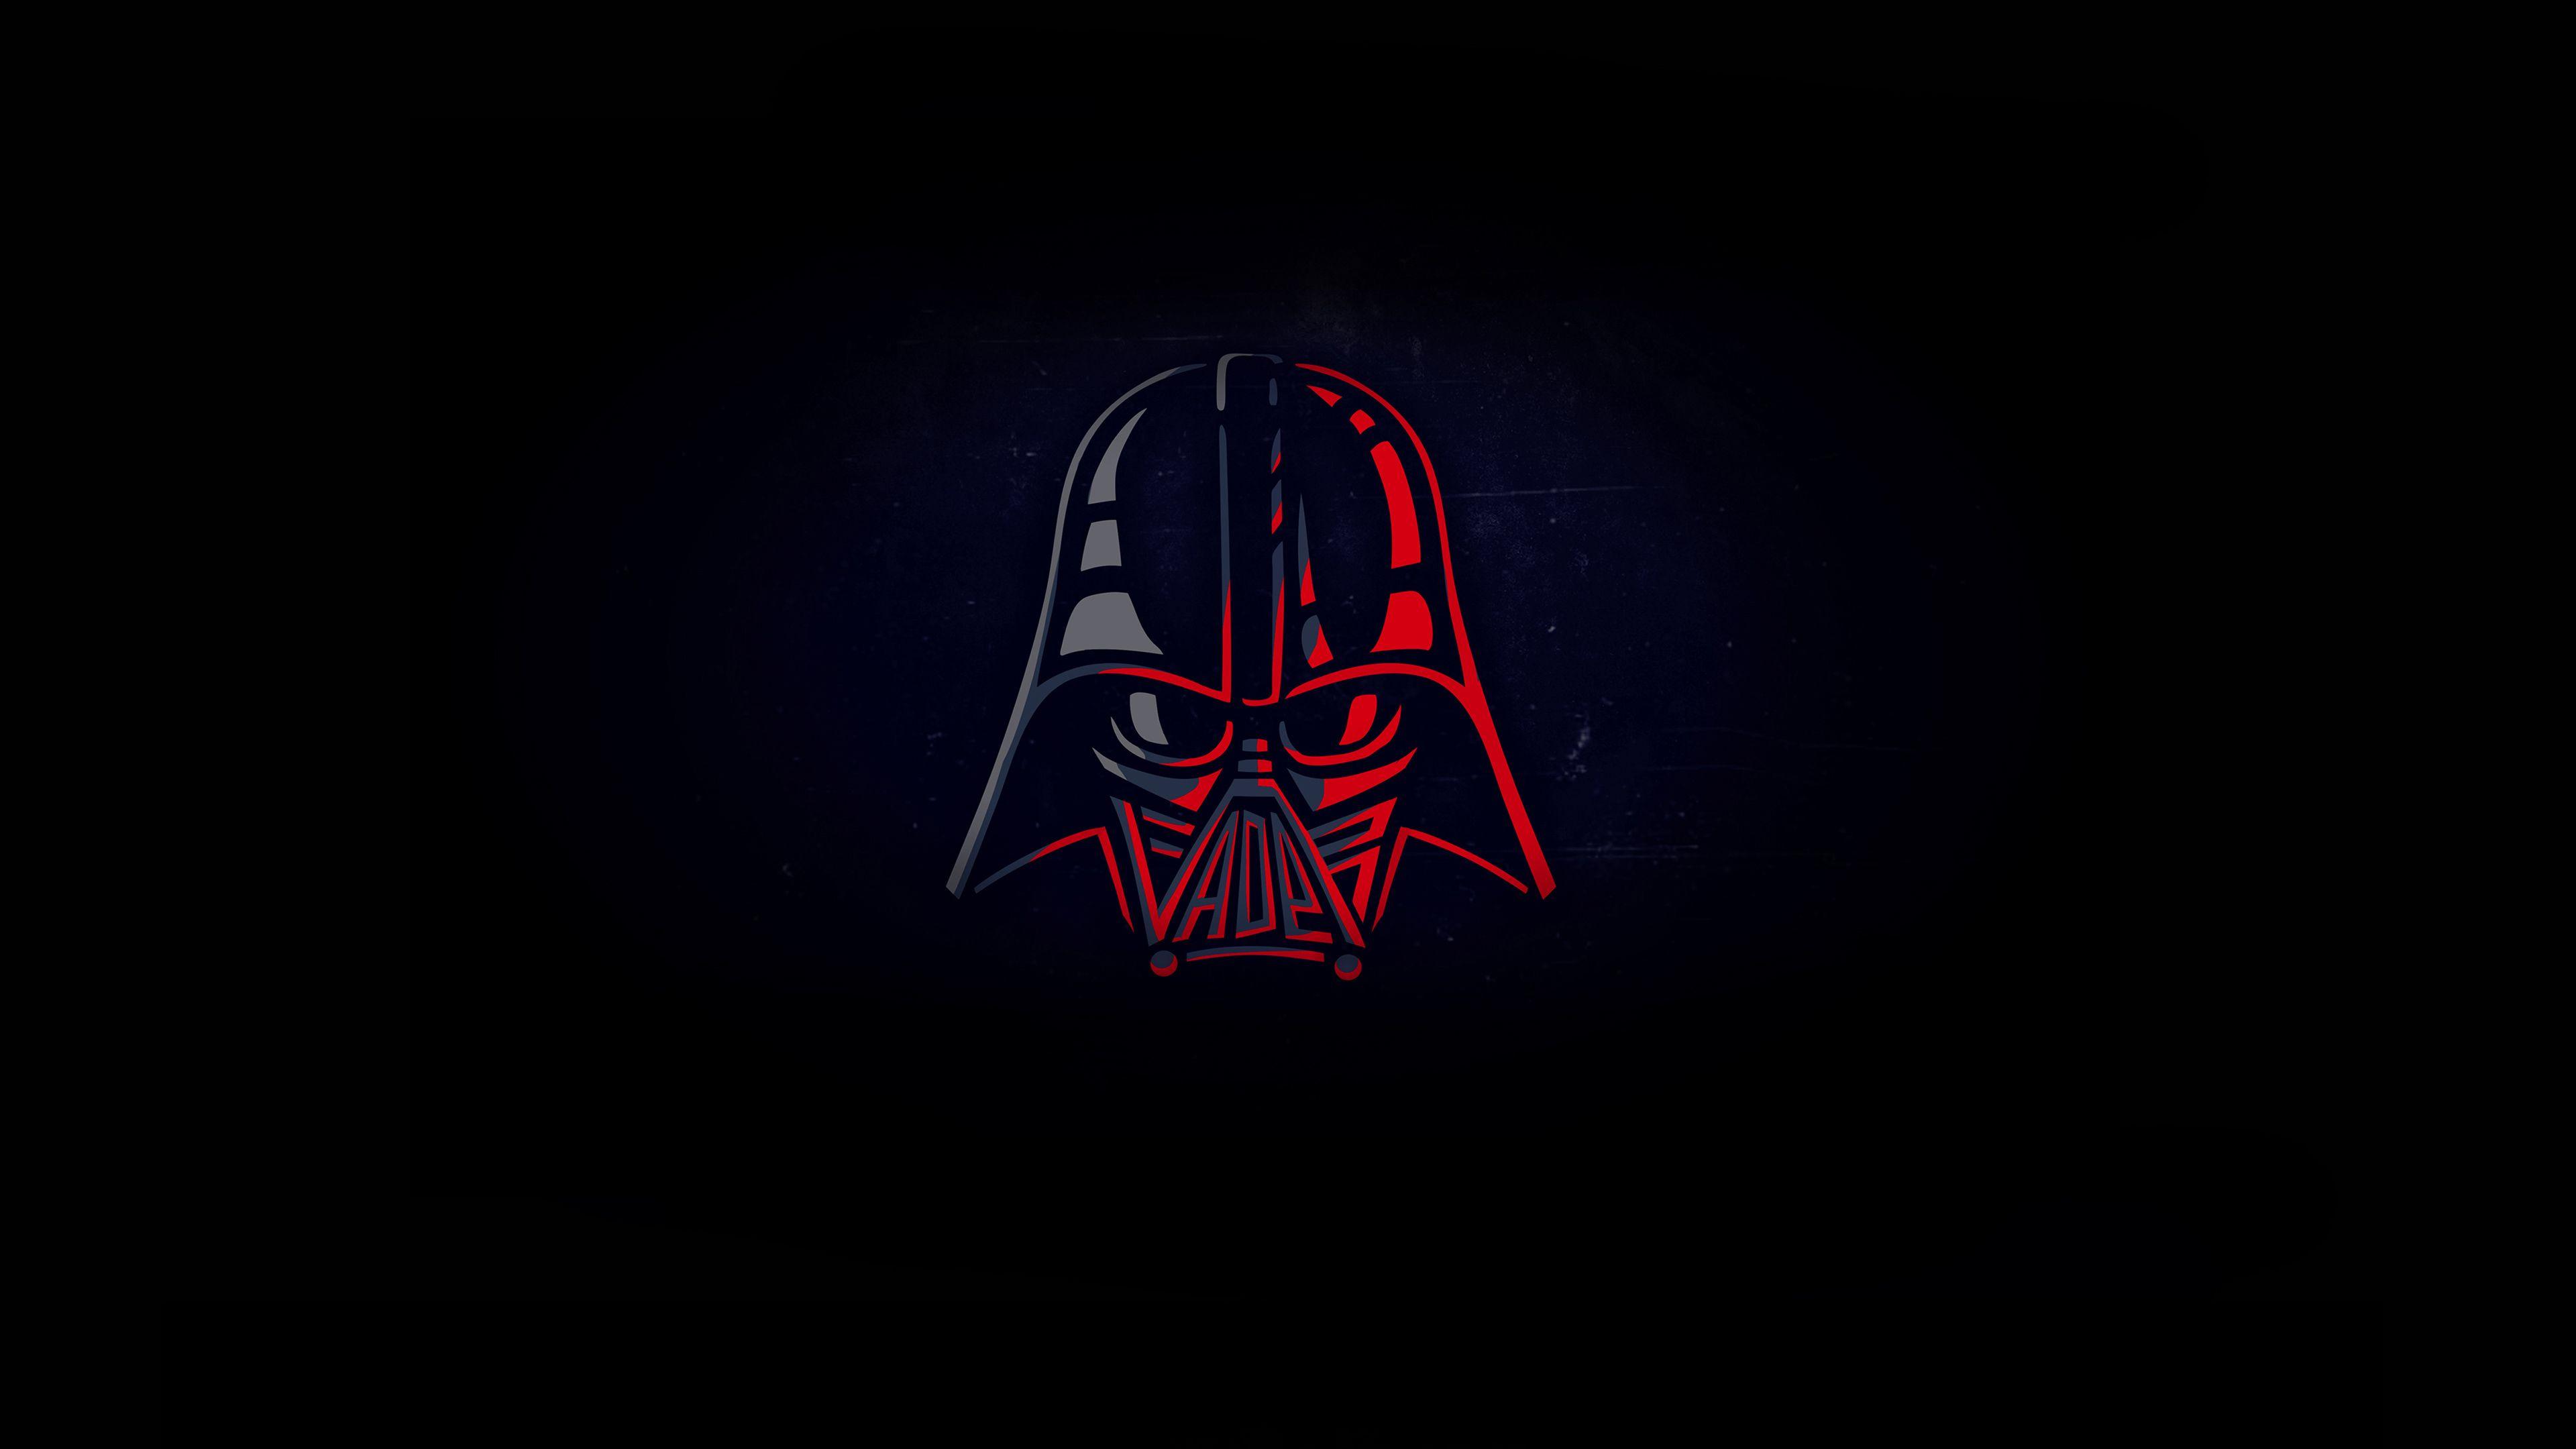 Darth Vader Minimal 4k star wars wallpaper, minimalist